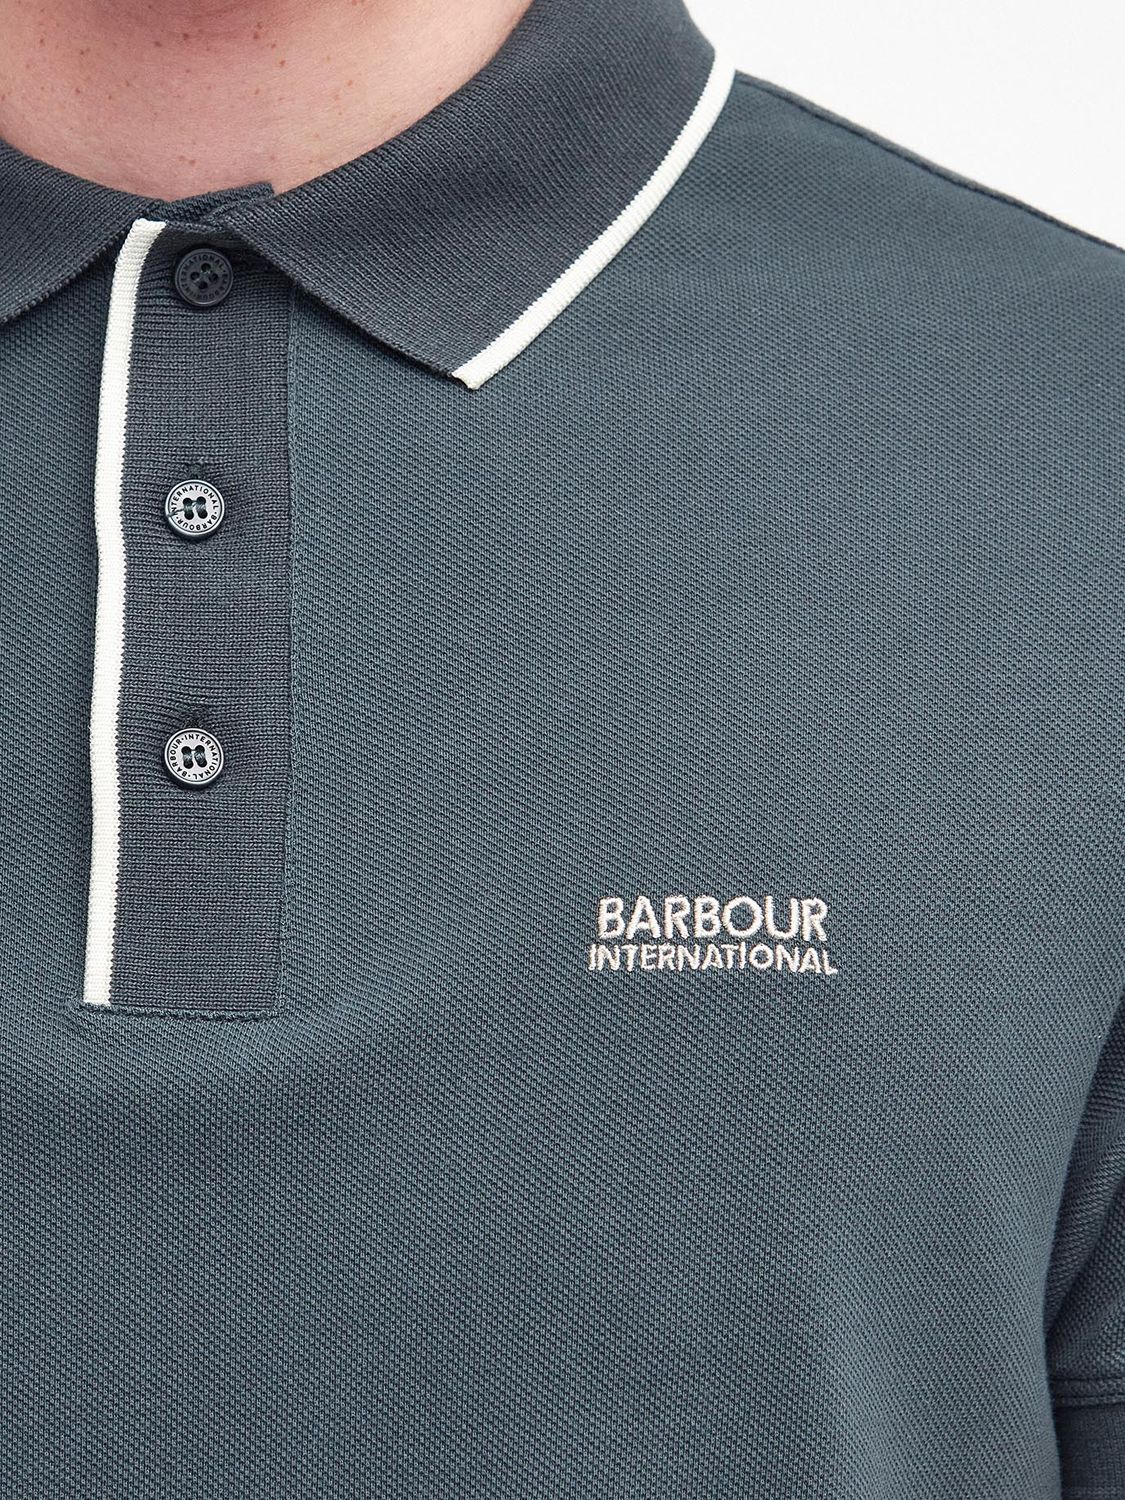 Buy Barbour International Moor Polo Shirt Online at johnlewis.com